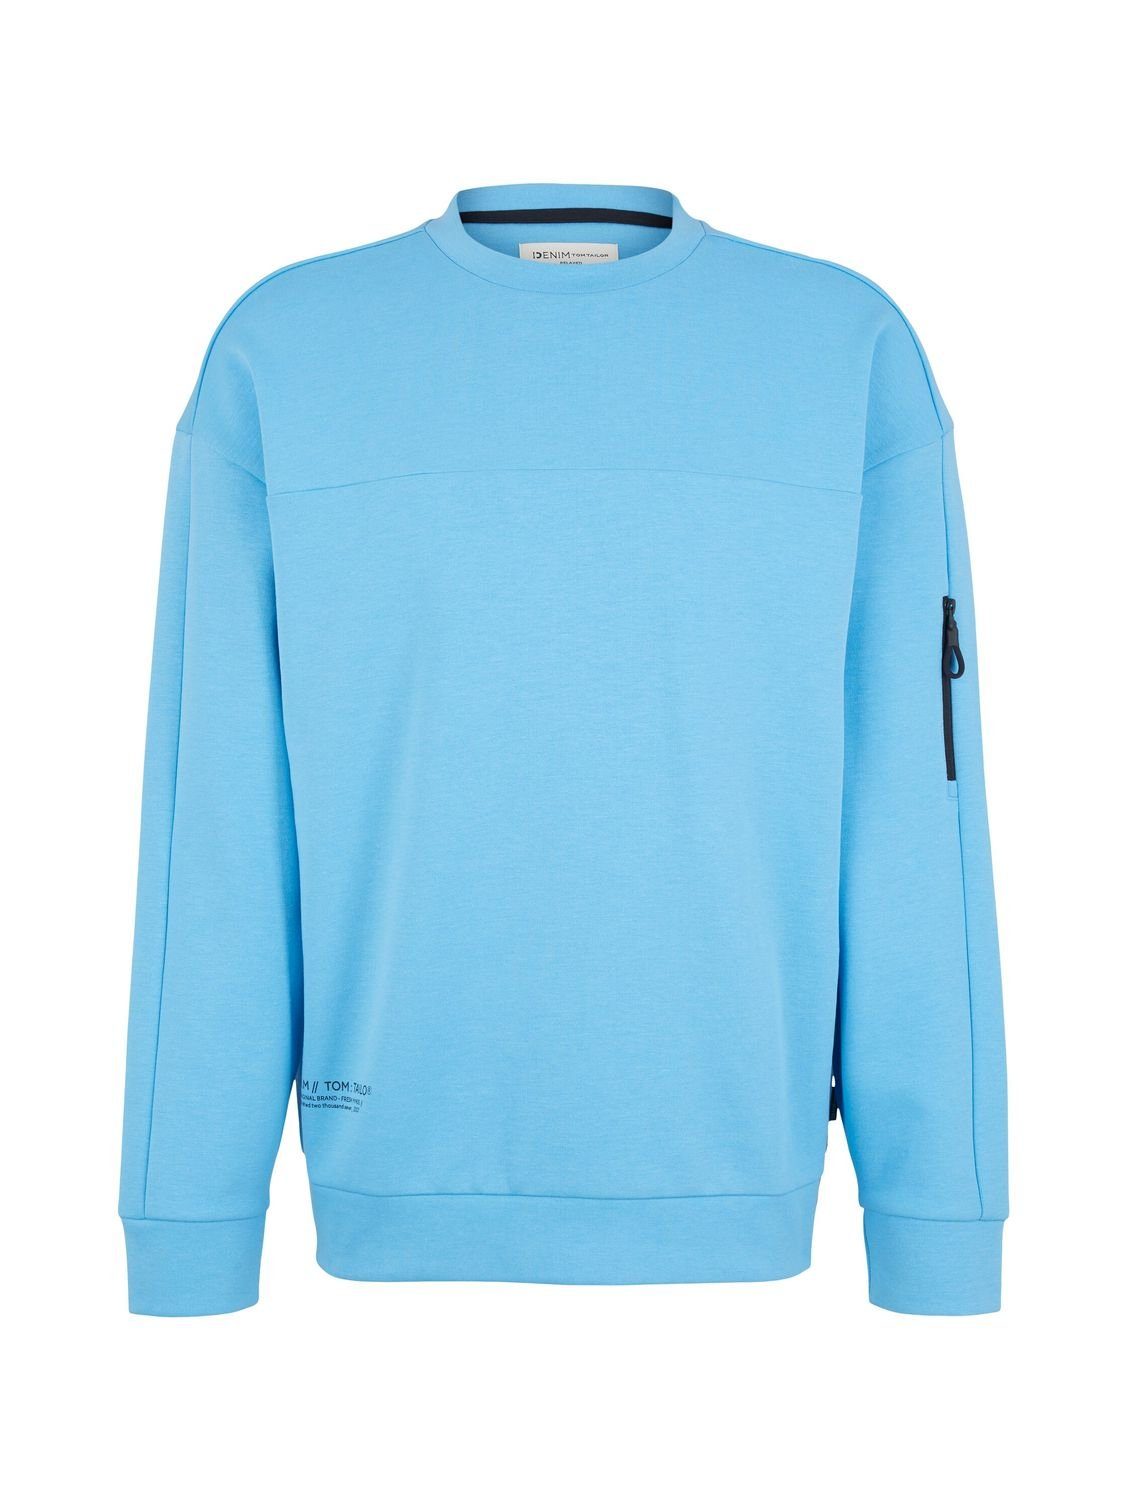 Denim Blue Sweatshirt 18395 aus RELAXED TAILOR Rainy Sky Baumwolle CREW TOM